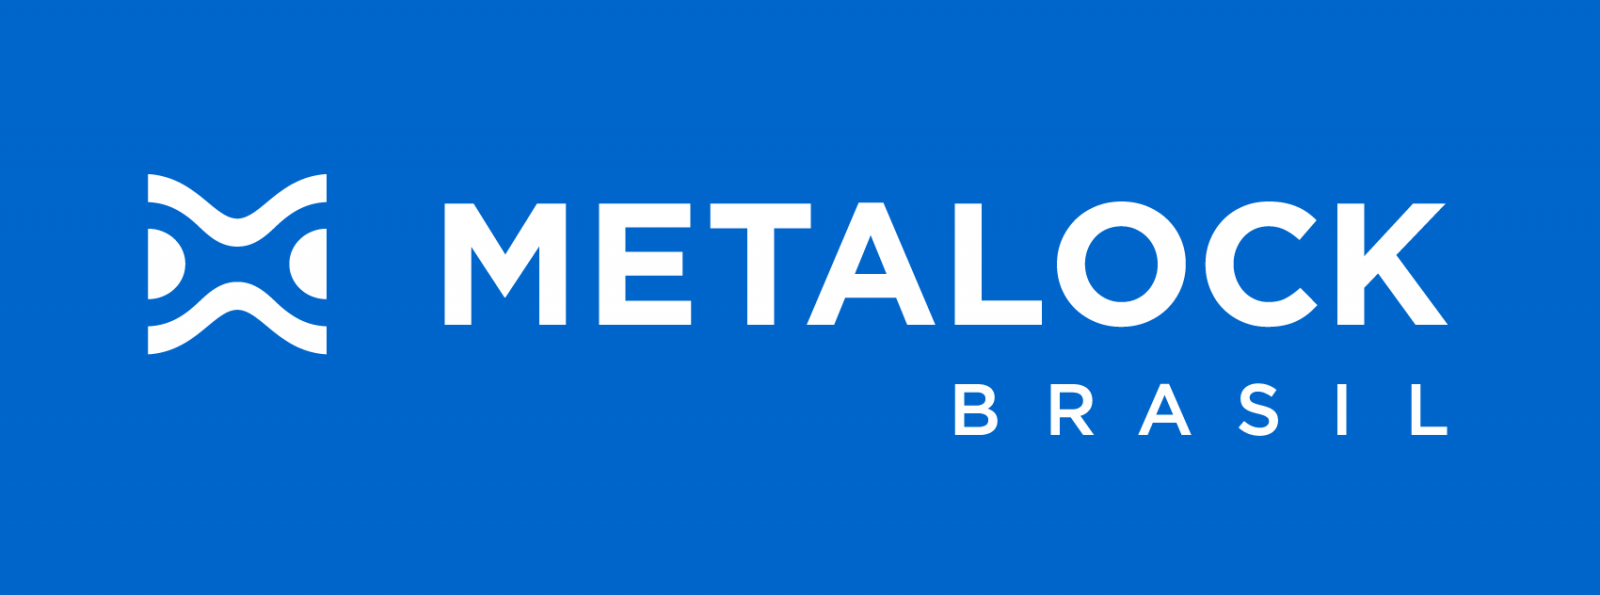 Metalock Brasil logo